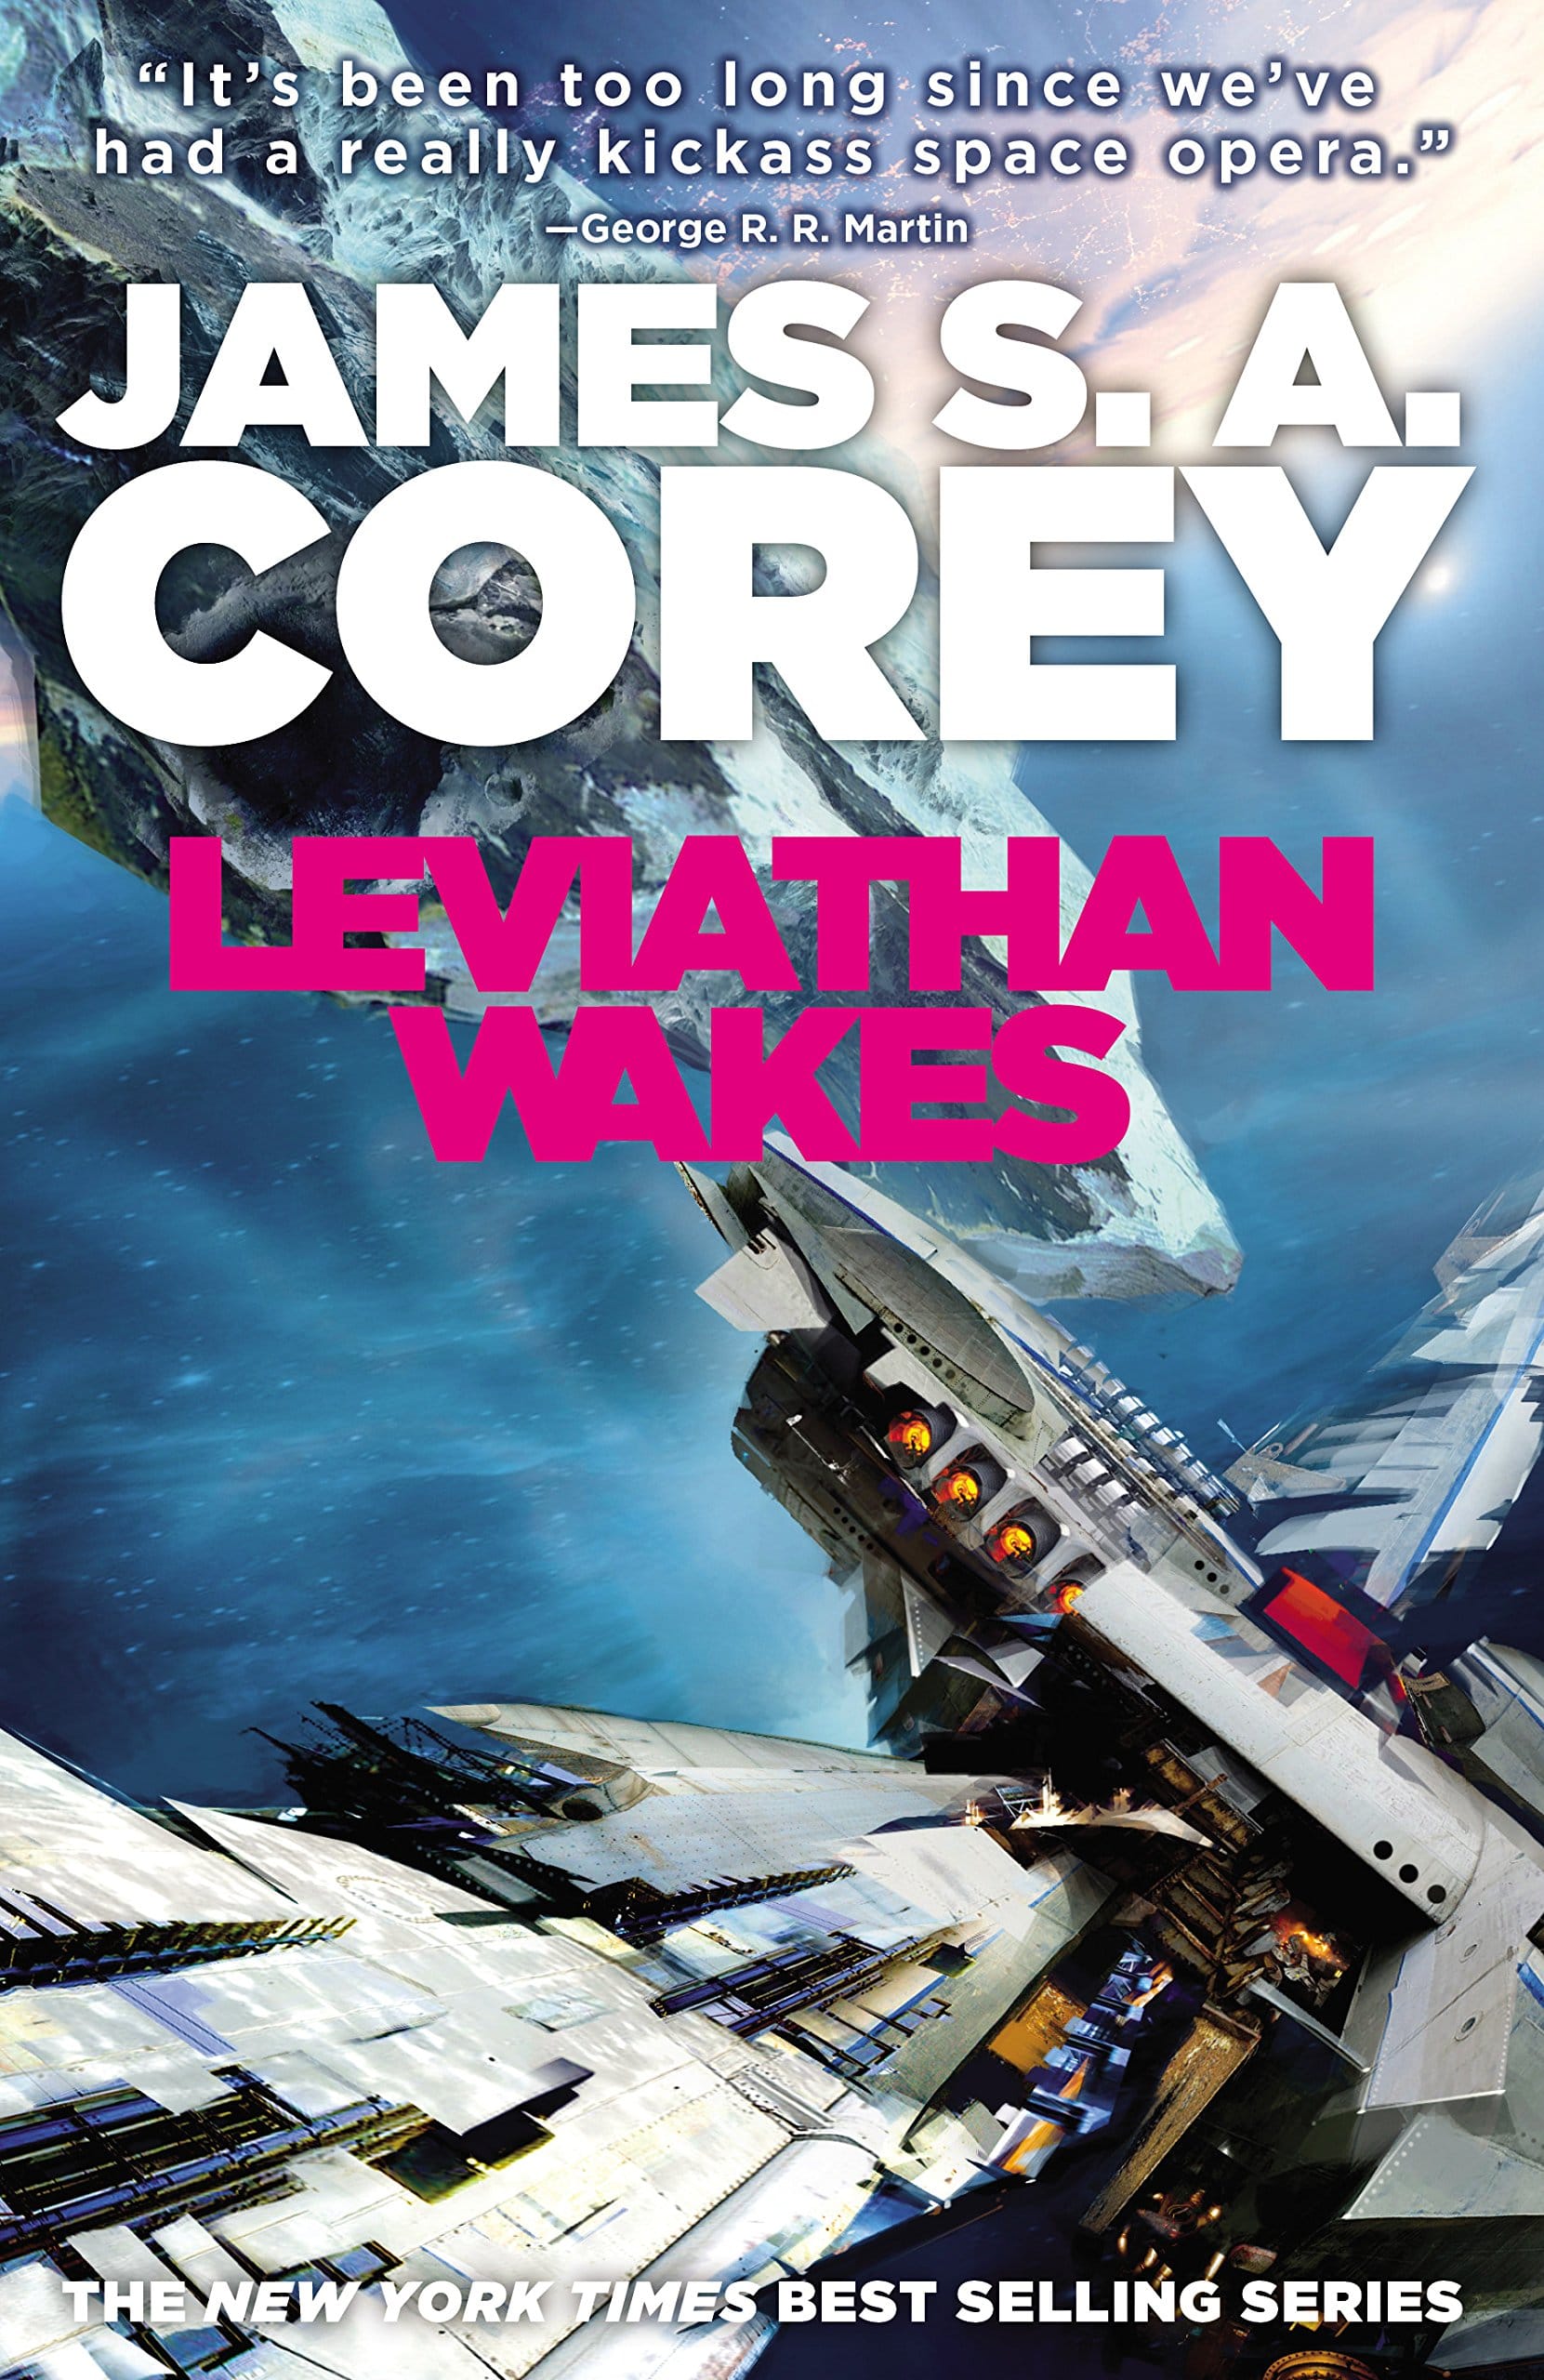 Book Review: Leviathan Wakes